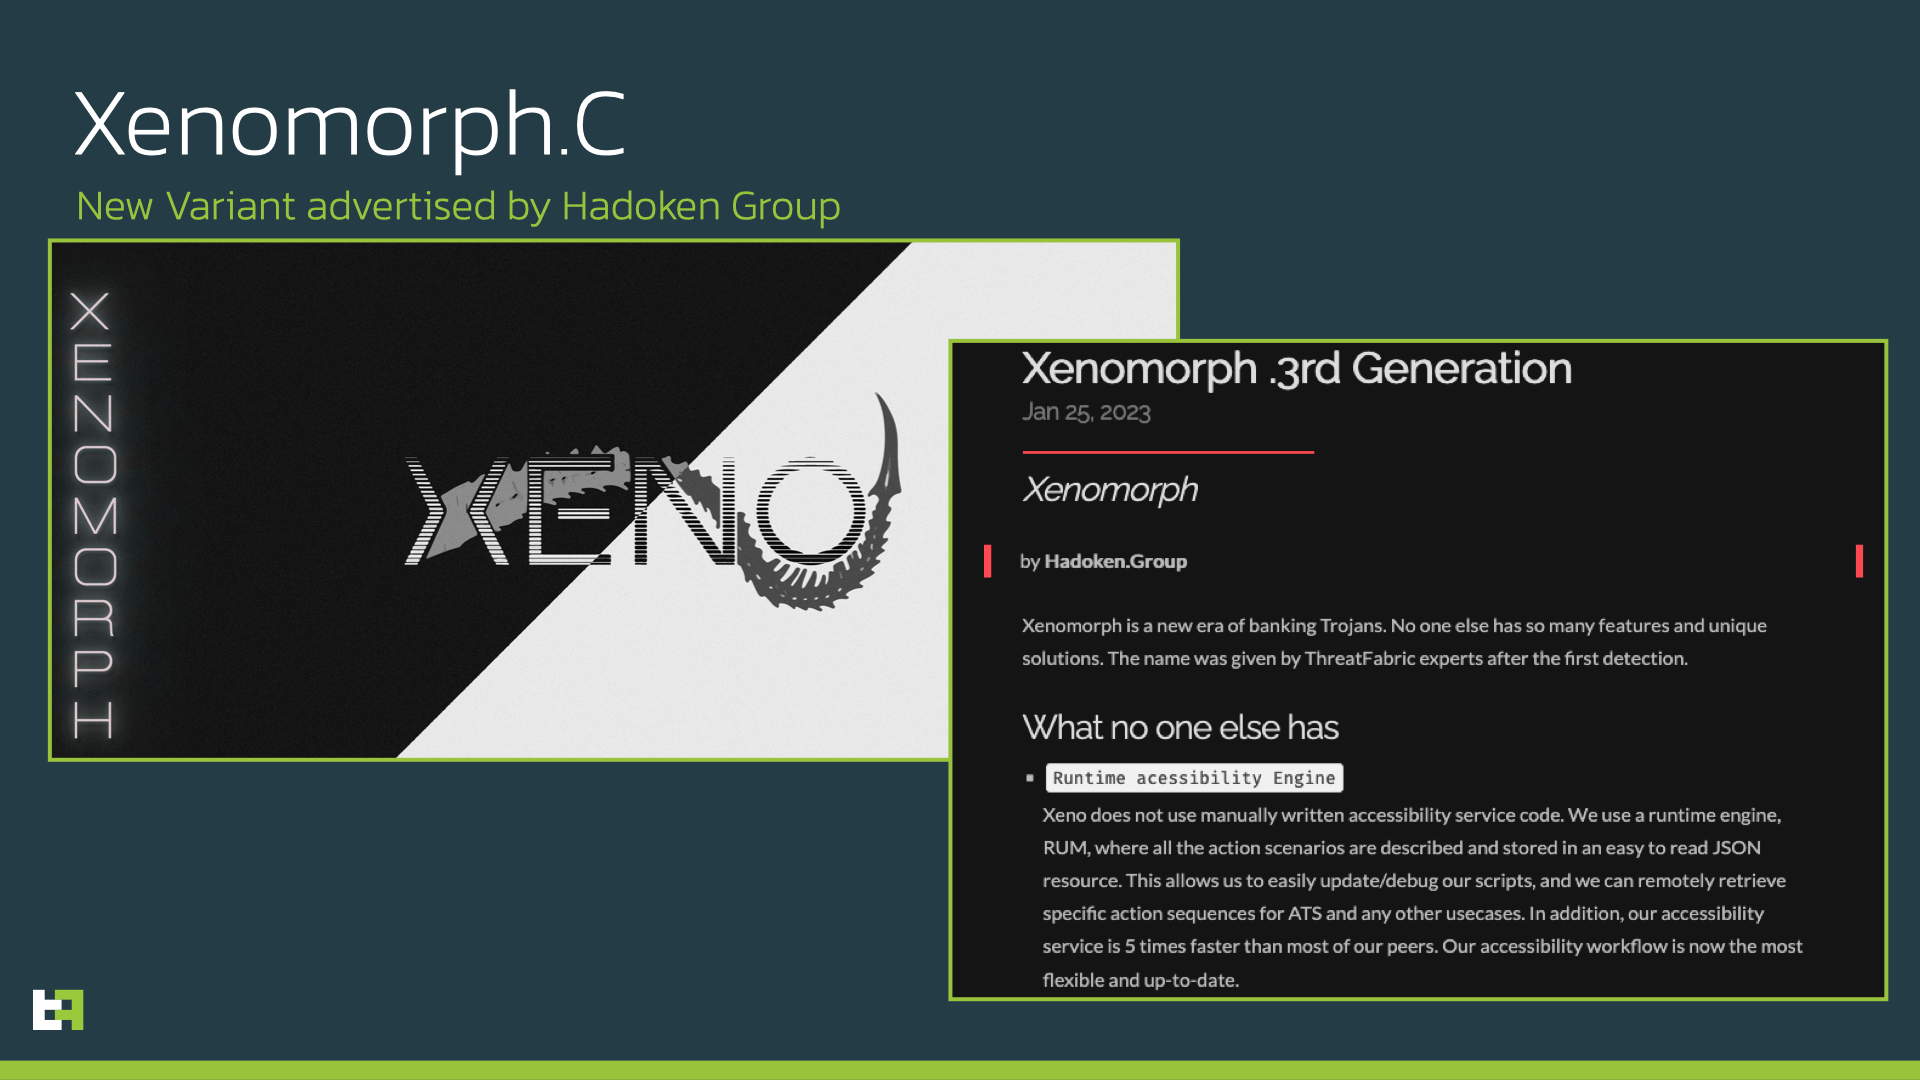 Xenomorph v3: a new variant with ATS targeting more than 400